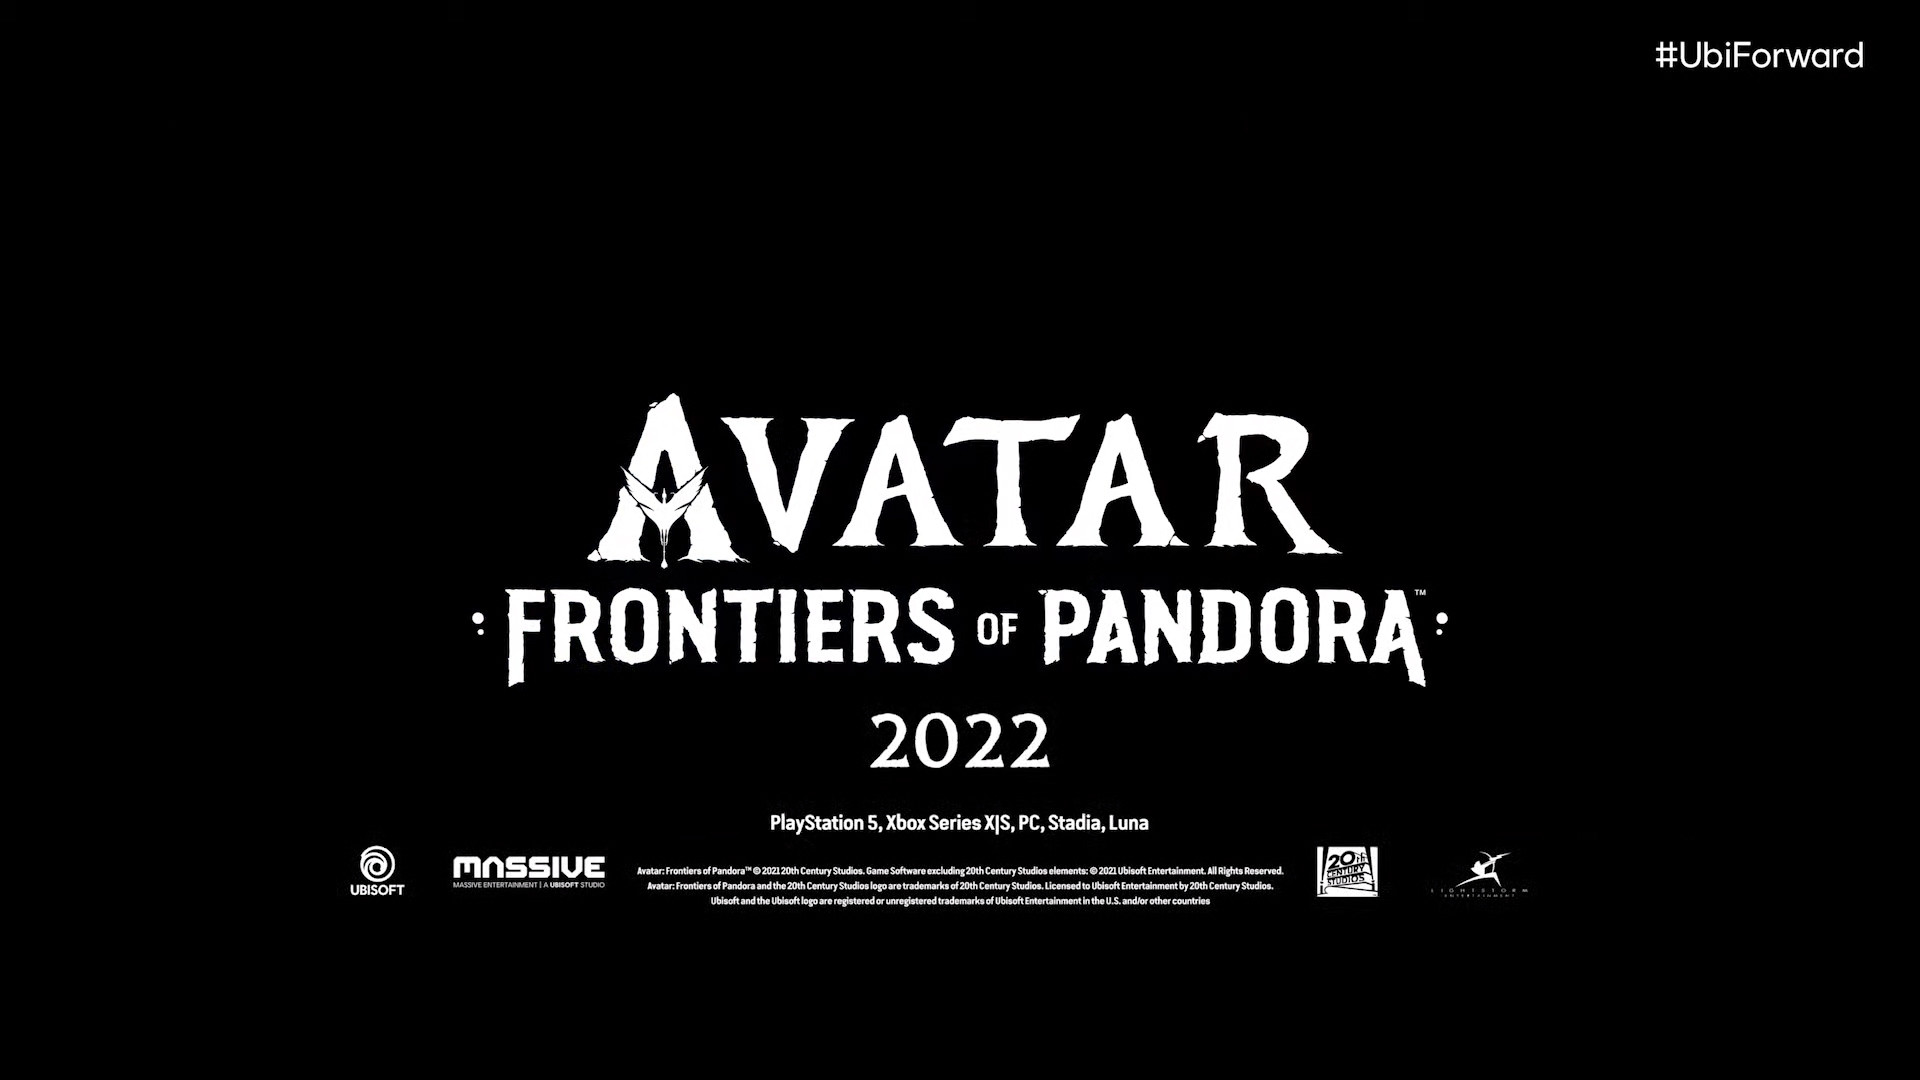 Quand sort Avatar Frontiers of Pandora ?